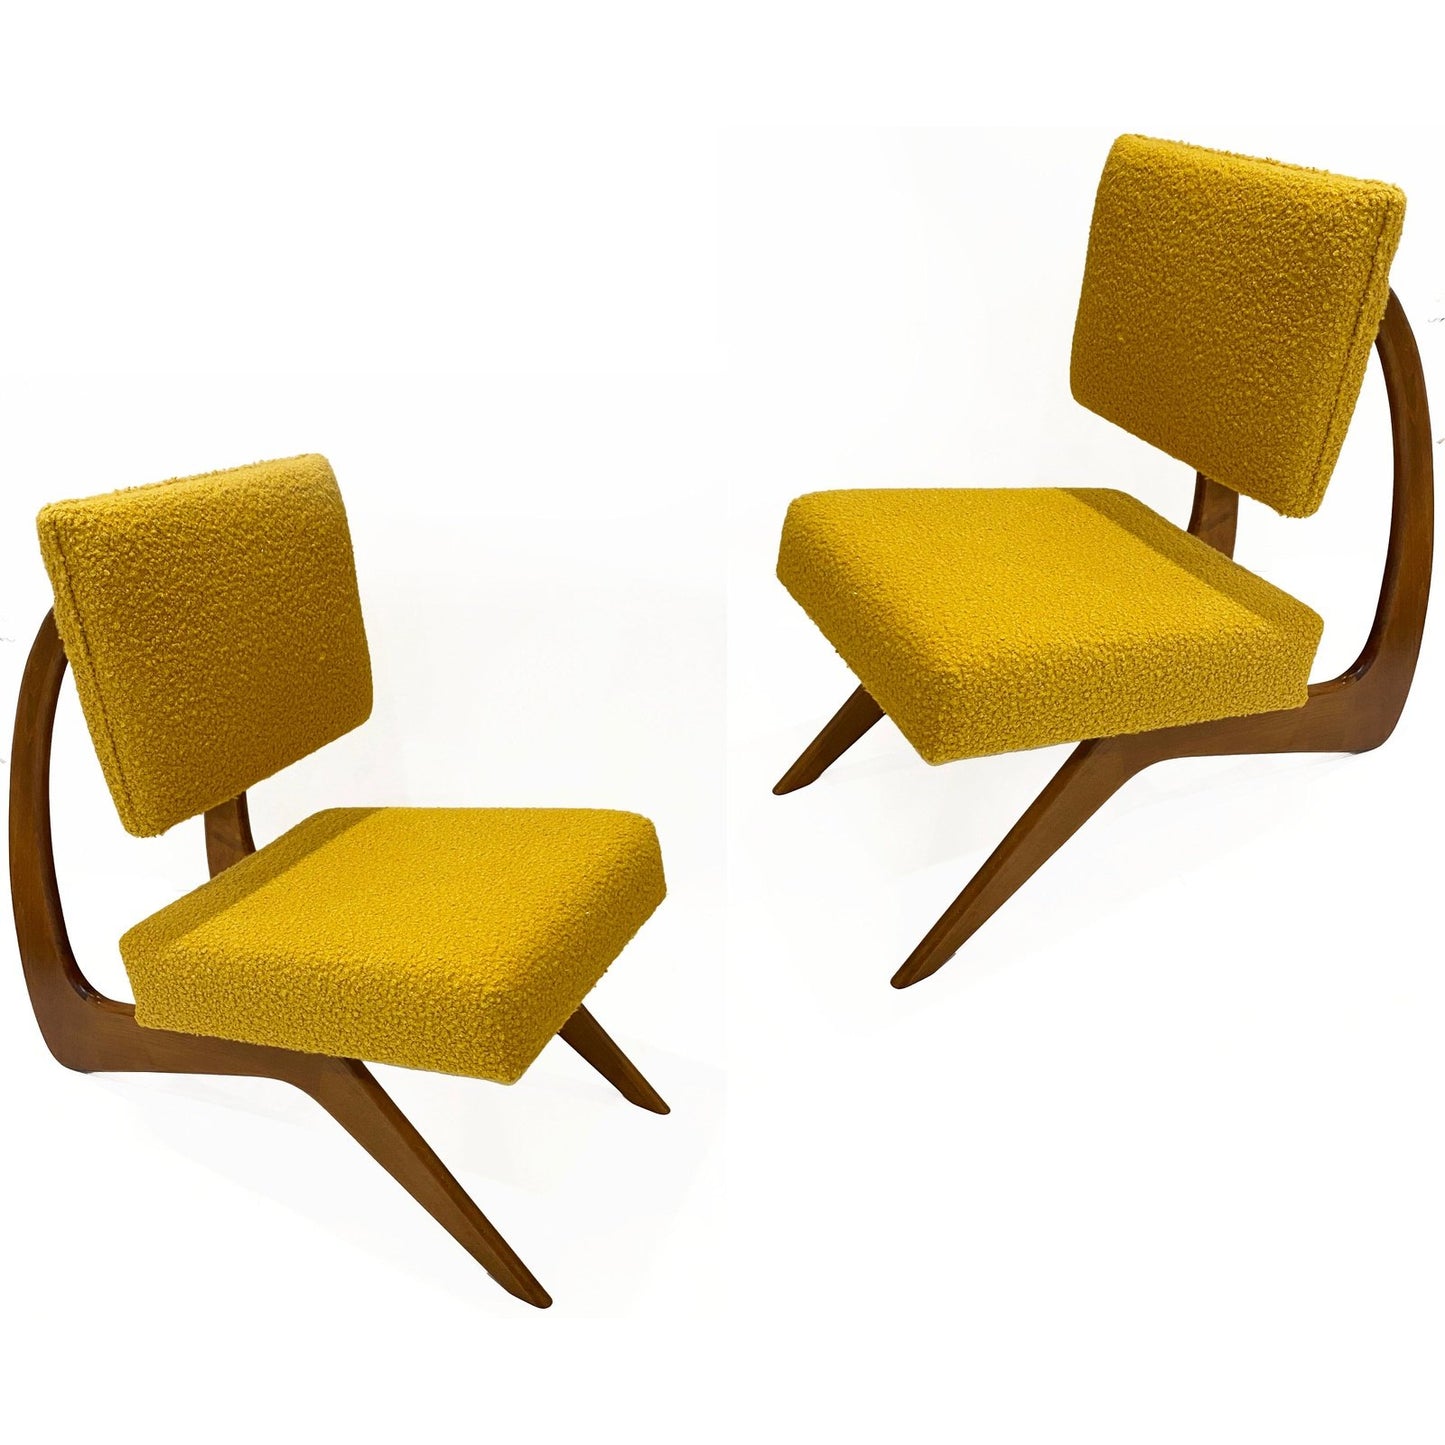 Bespoke Italian Pair of Boucle Mustard Yellow Aero Curved Beech Lounge Chairs